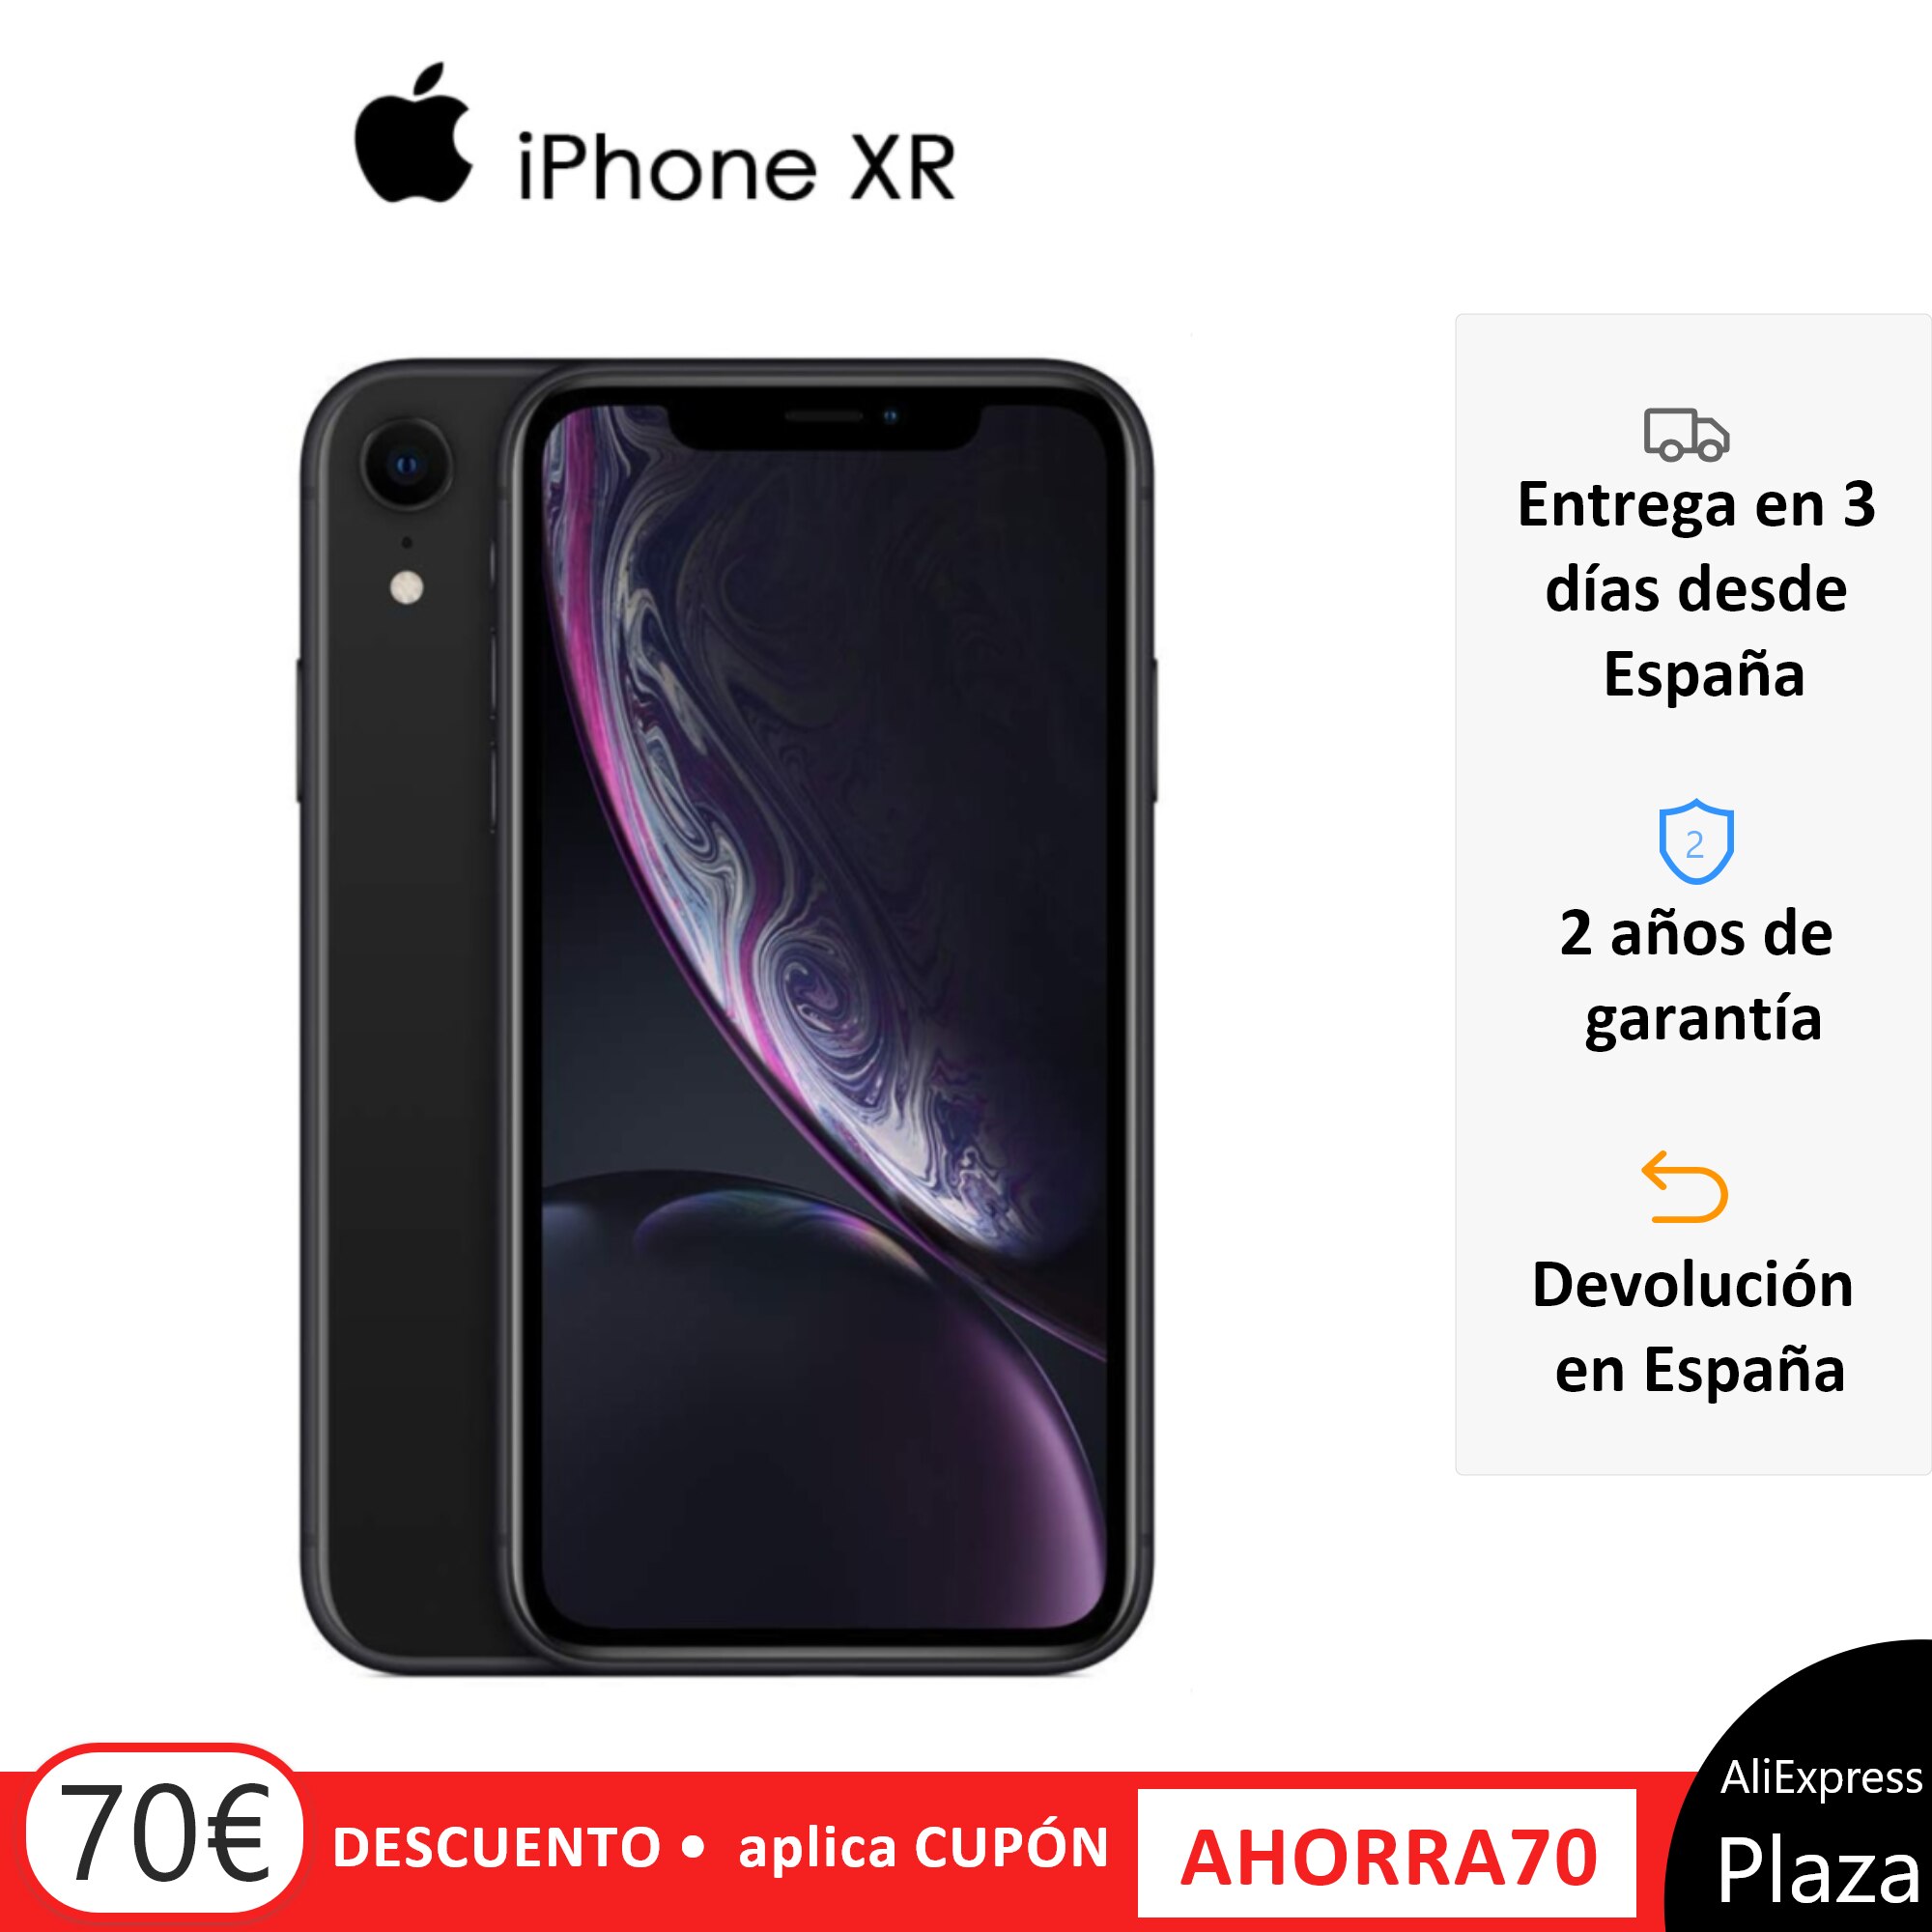 Smartphone Apple iPhone XR, 64 GB, 3 GB RAM, Band 4G/LTE/Wi-Fi, 15,5 cm (Pantalla 6.1 "), Color negro, versión Española